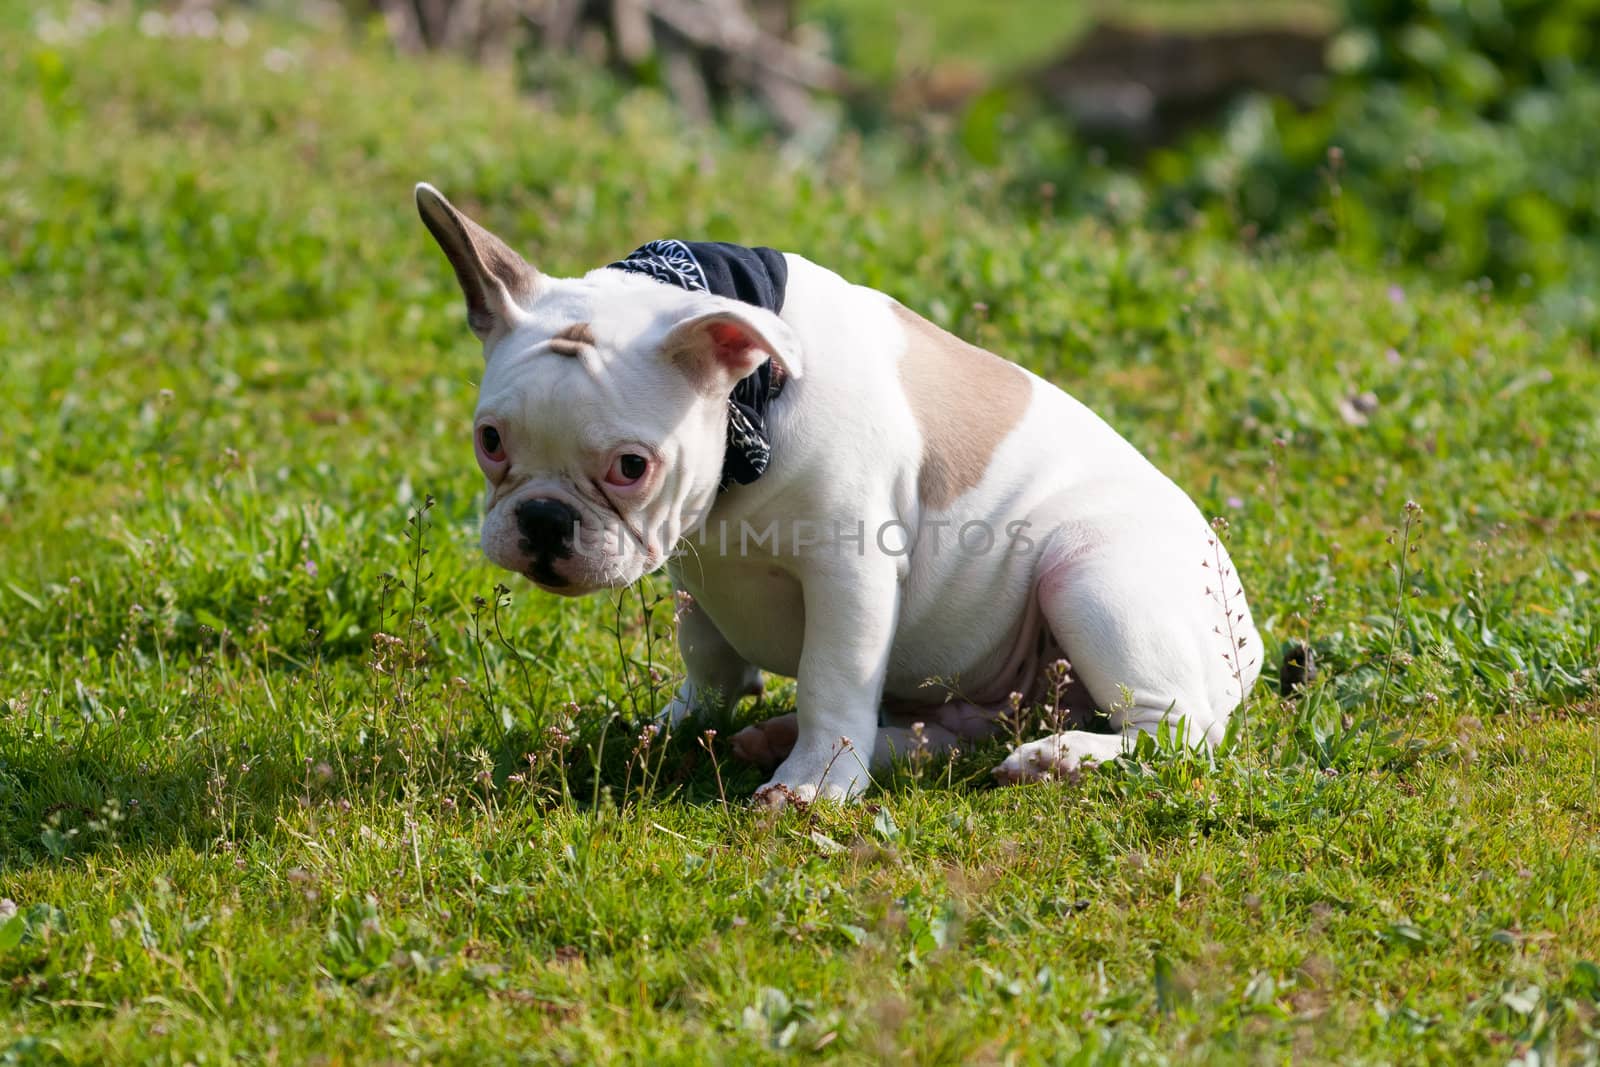 Shy French Bulldog sitting on grass by pcusine